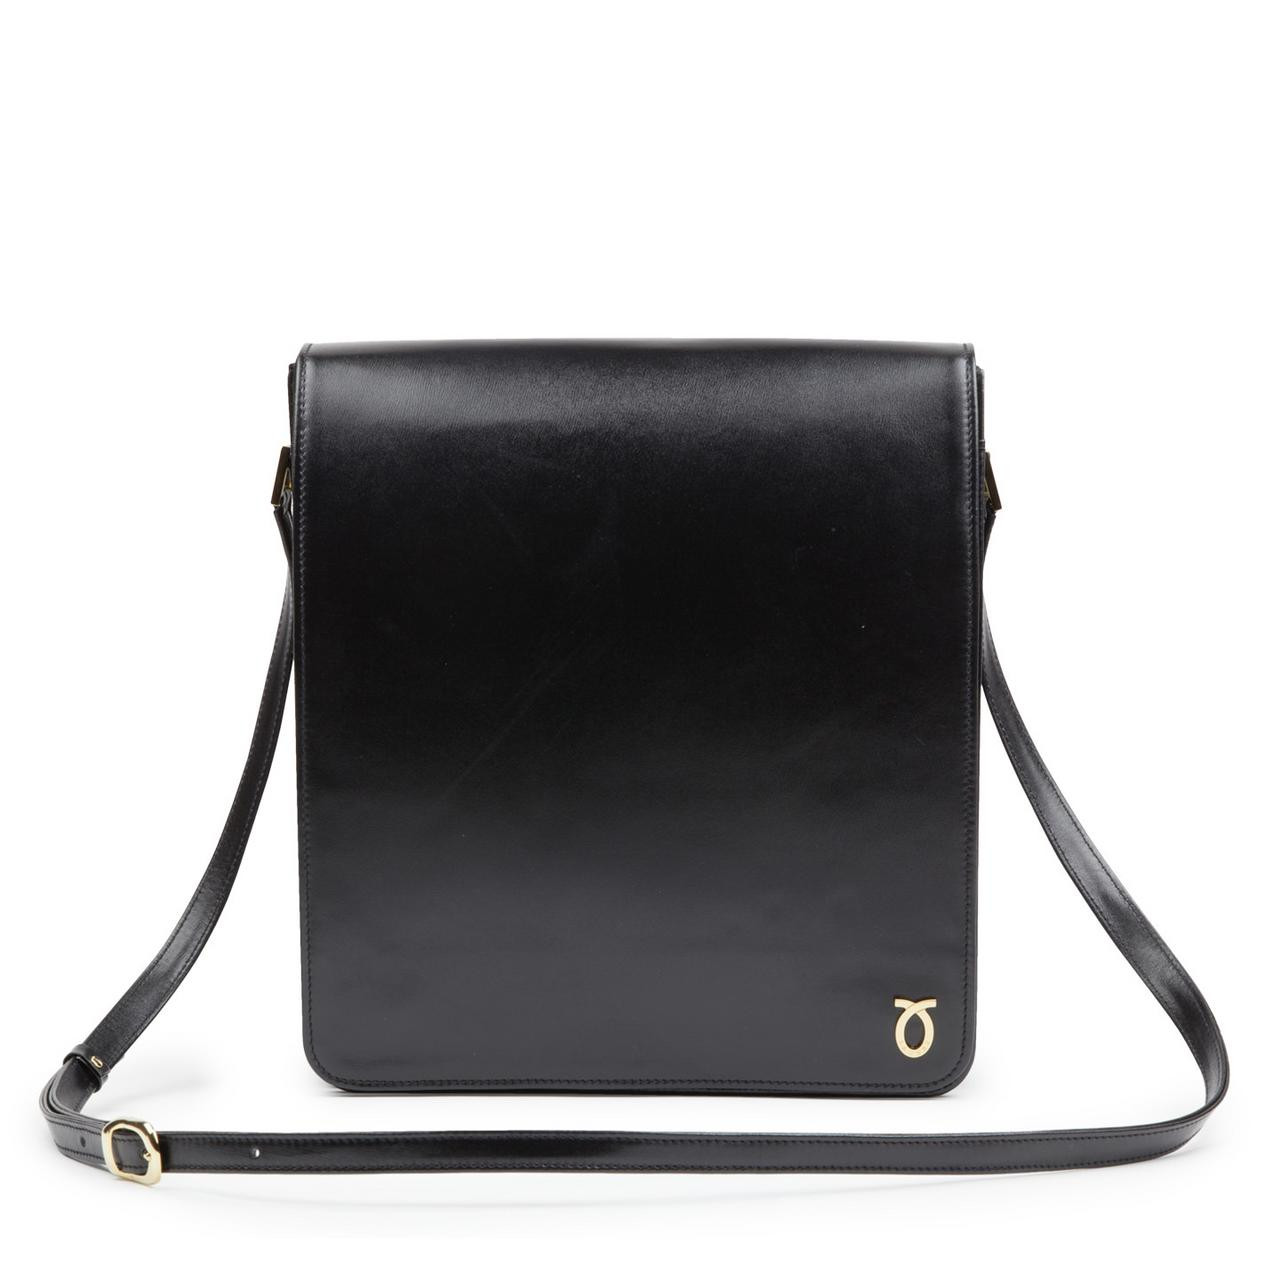 Launer Handbags: Launer London Customizable Juliet Handbag